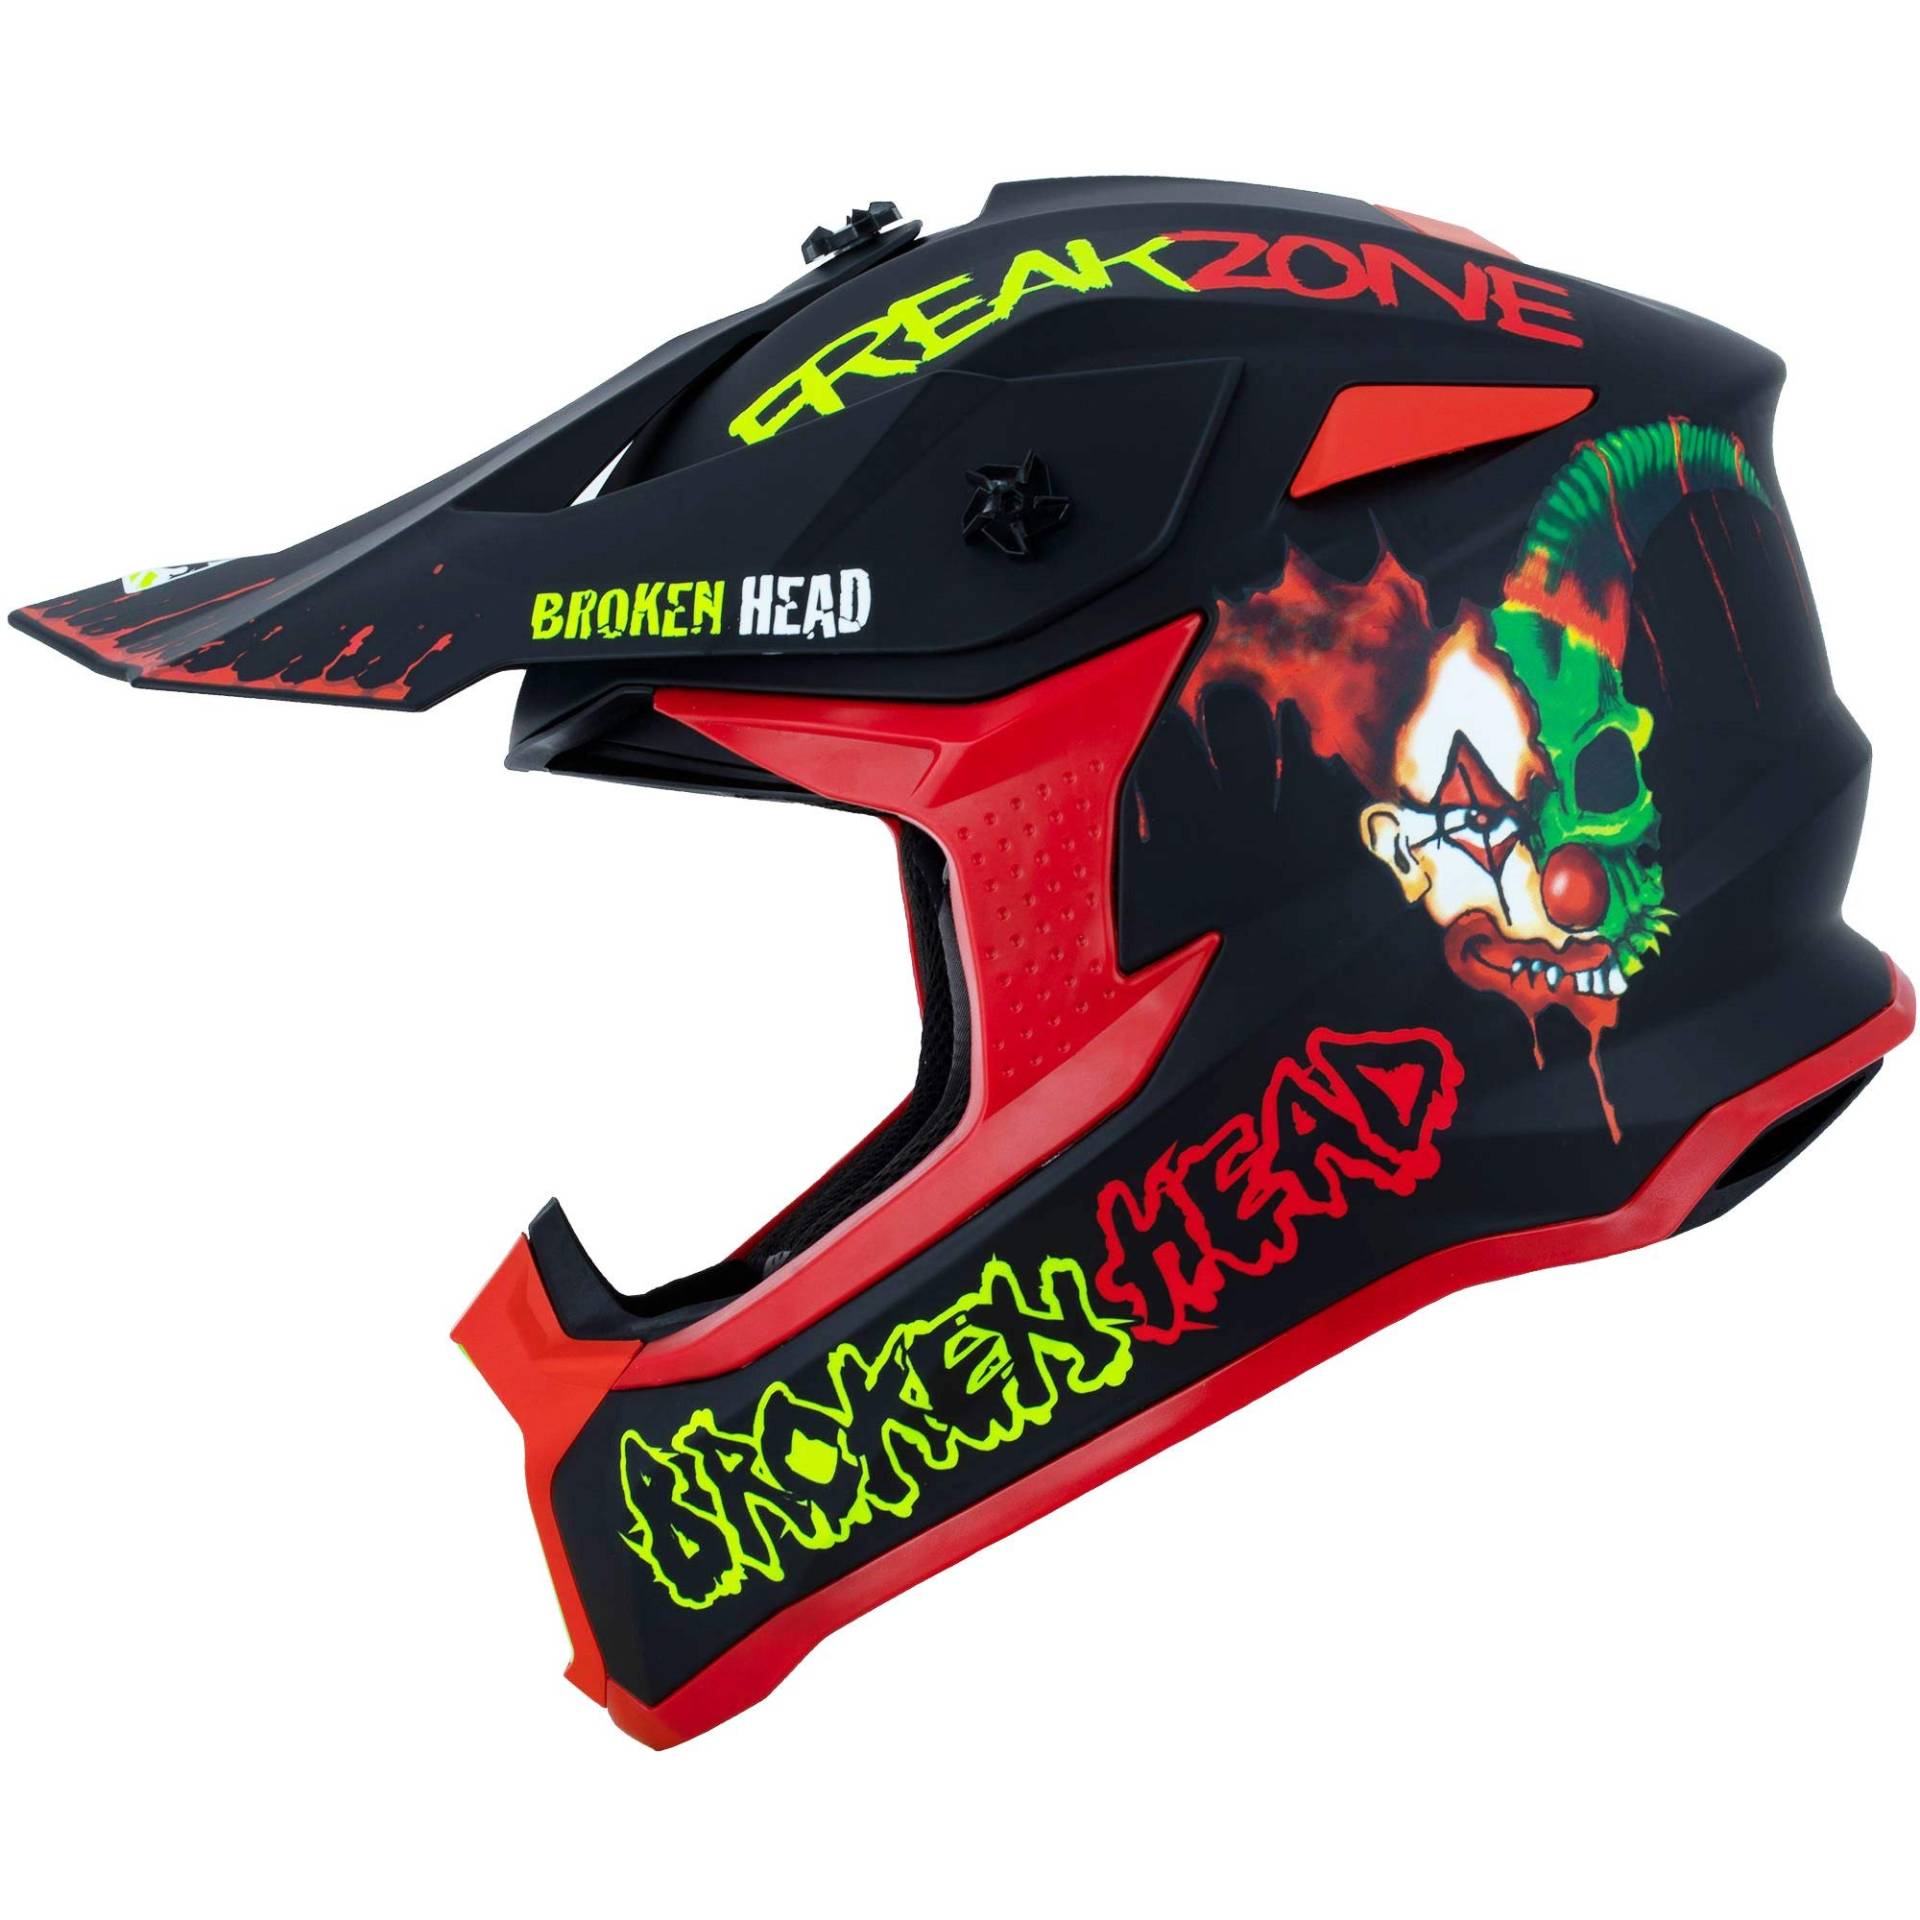 Broken Head FreakZone Motocross-Helm Schwarz-Grün-Rot matt – Cross-Helm – MX – Quad – Supermoto (M 57-58 cm) von Broken Head